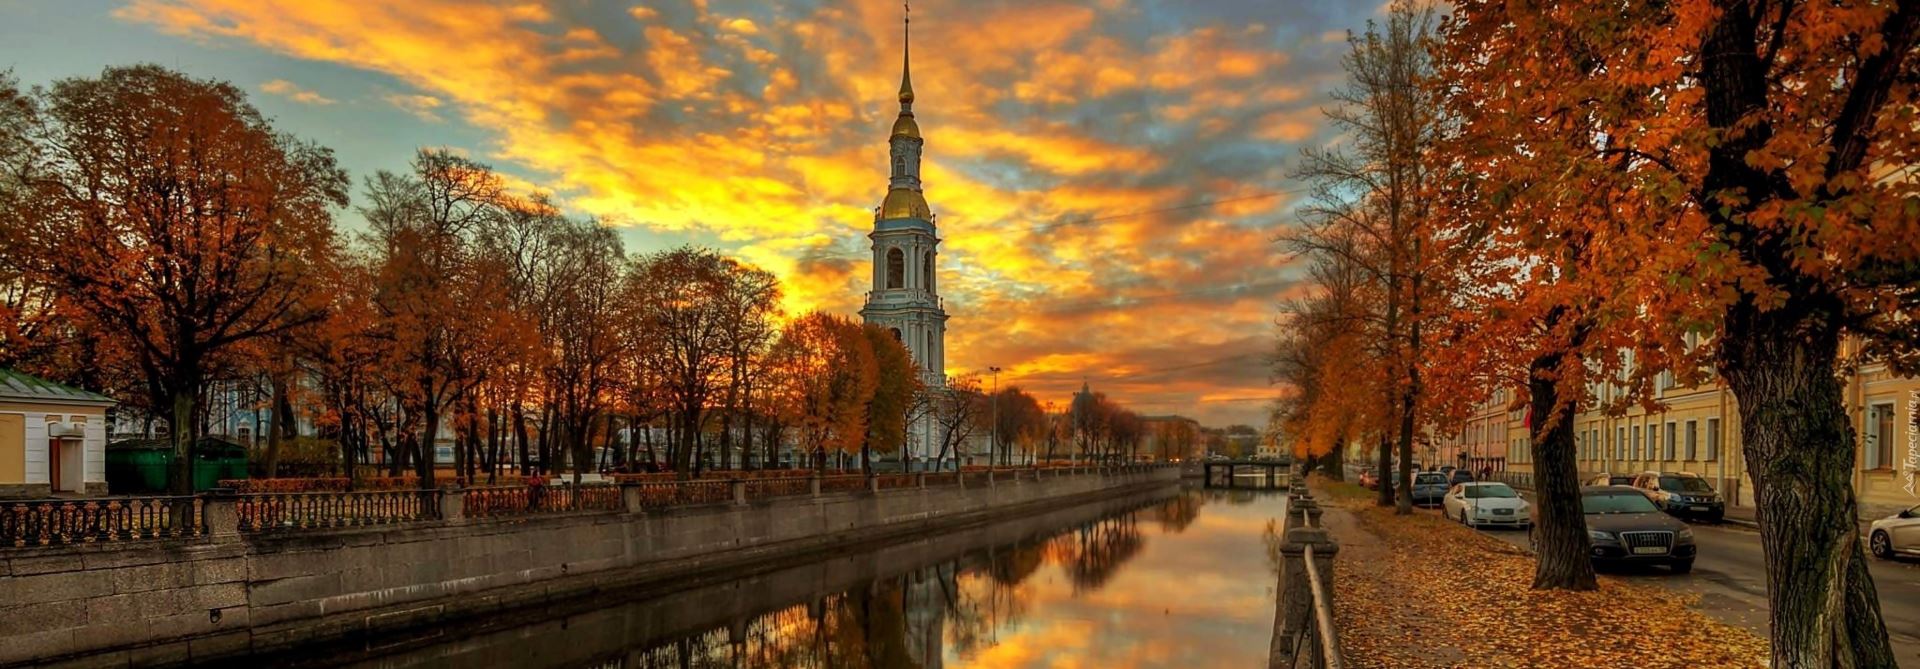 Санкт-Петербург осенью панорама